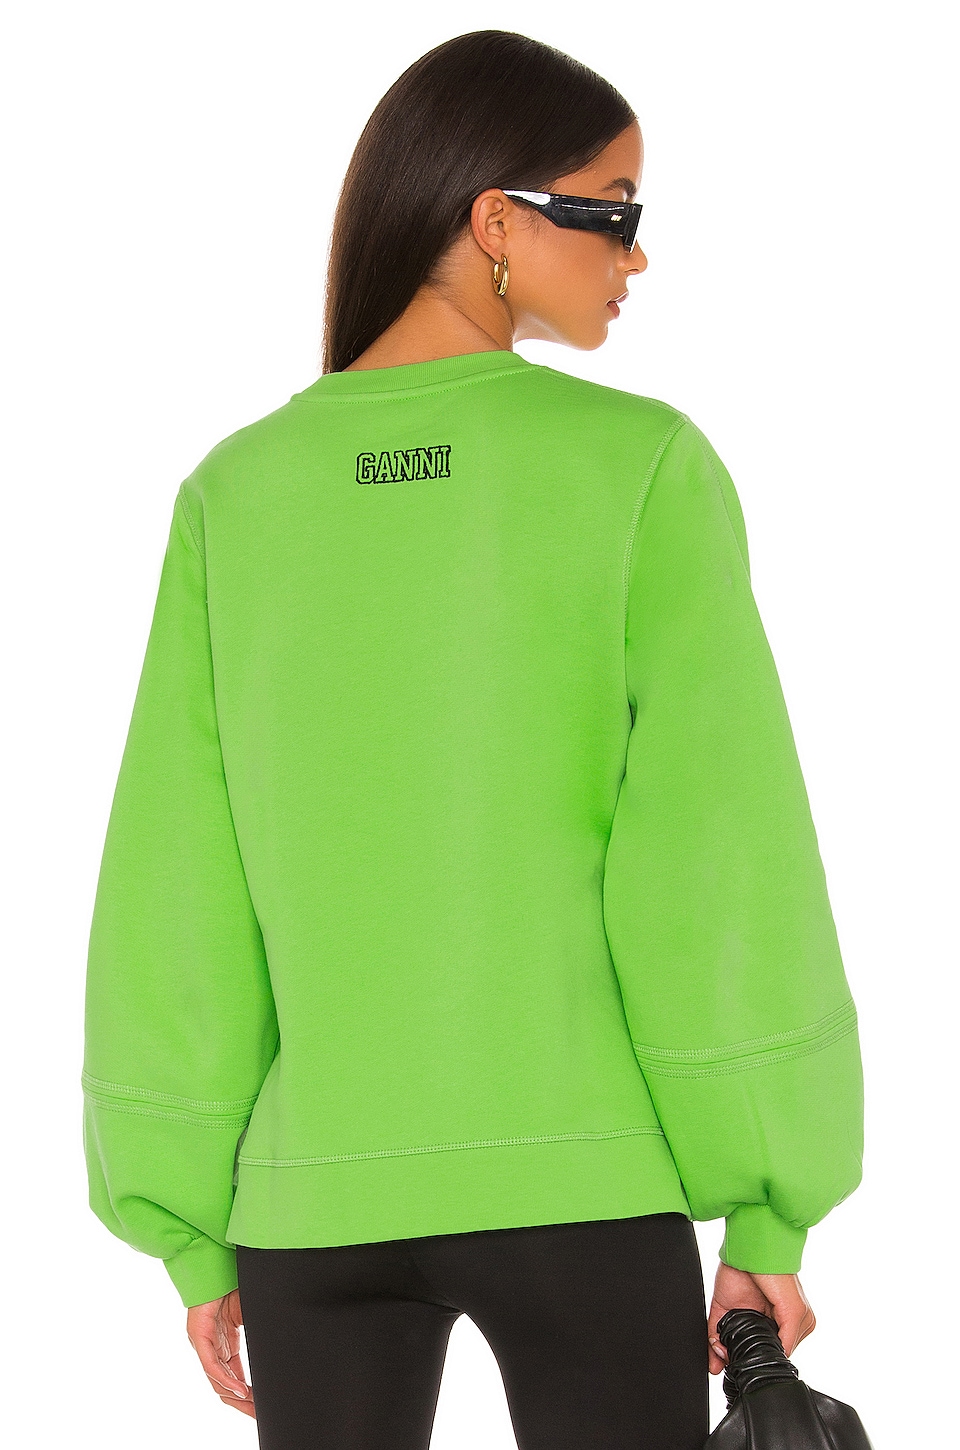 Ganni Puff Sleeve Sweatshirt in Flash Green | REVOLVE